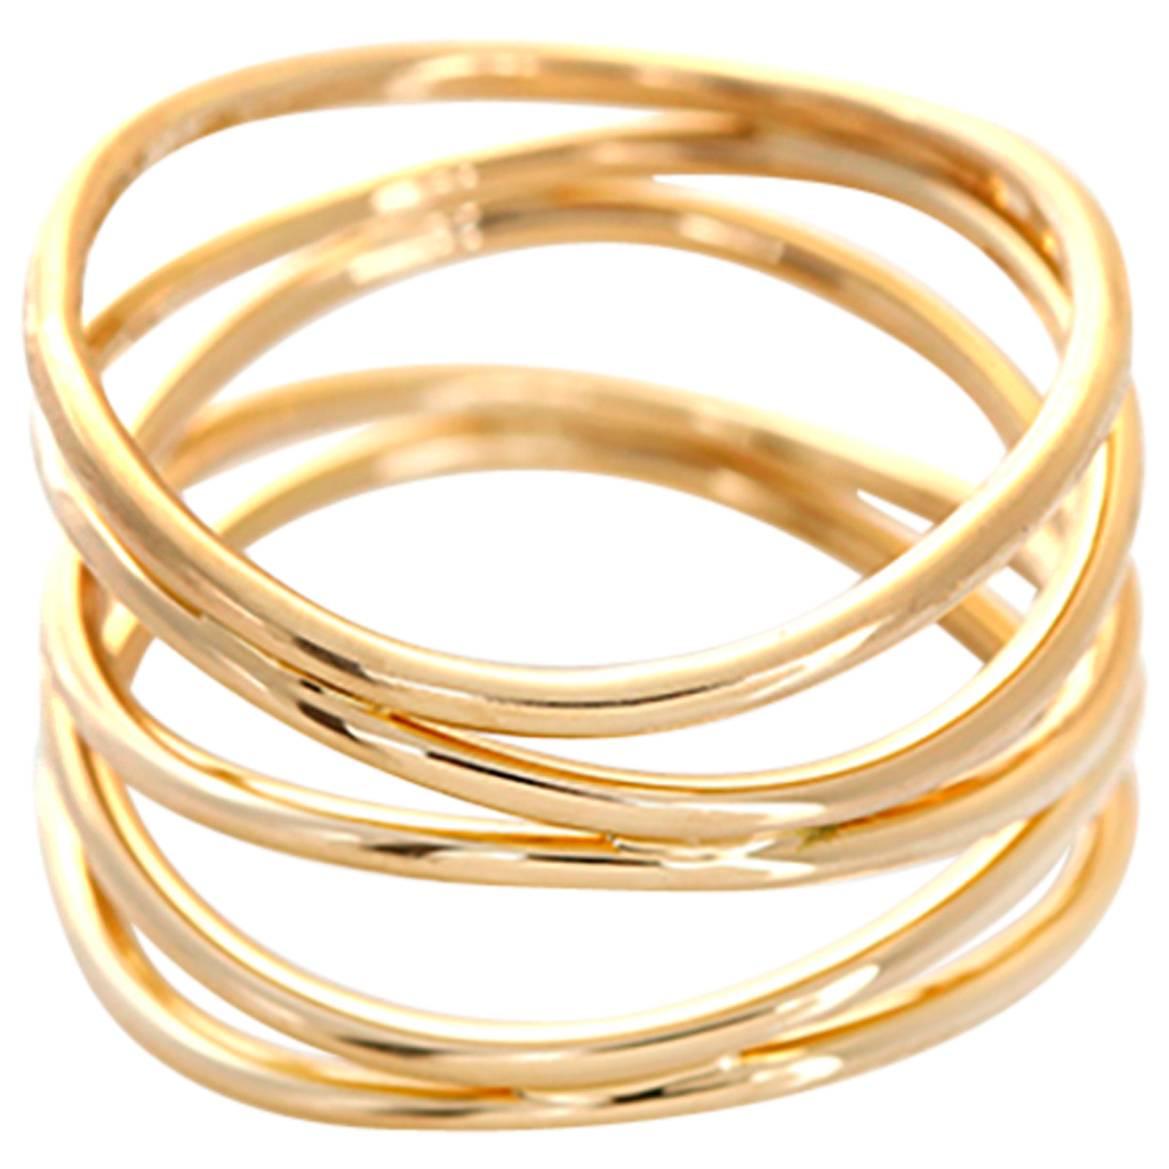 Tiffany & Co. Elsa Peretti Wave Yellow Gold Ring Sz. 6-1/2